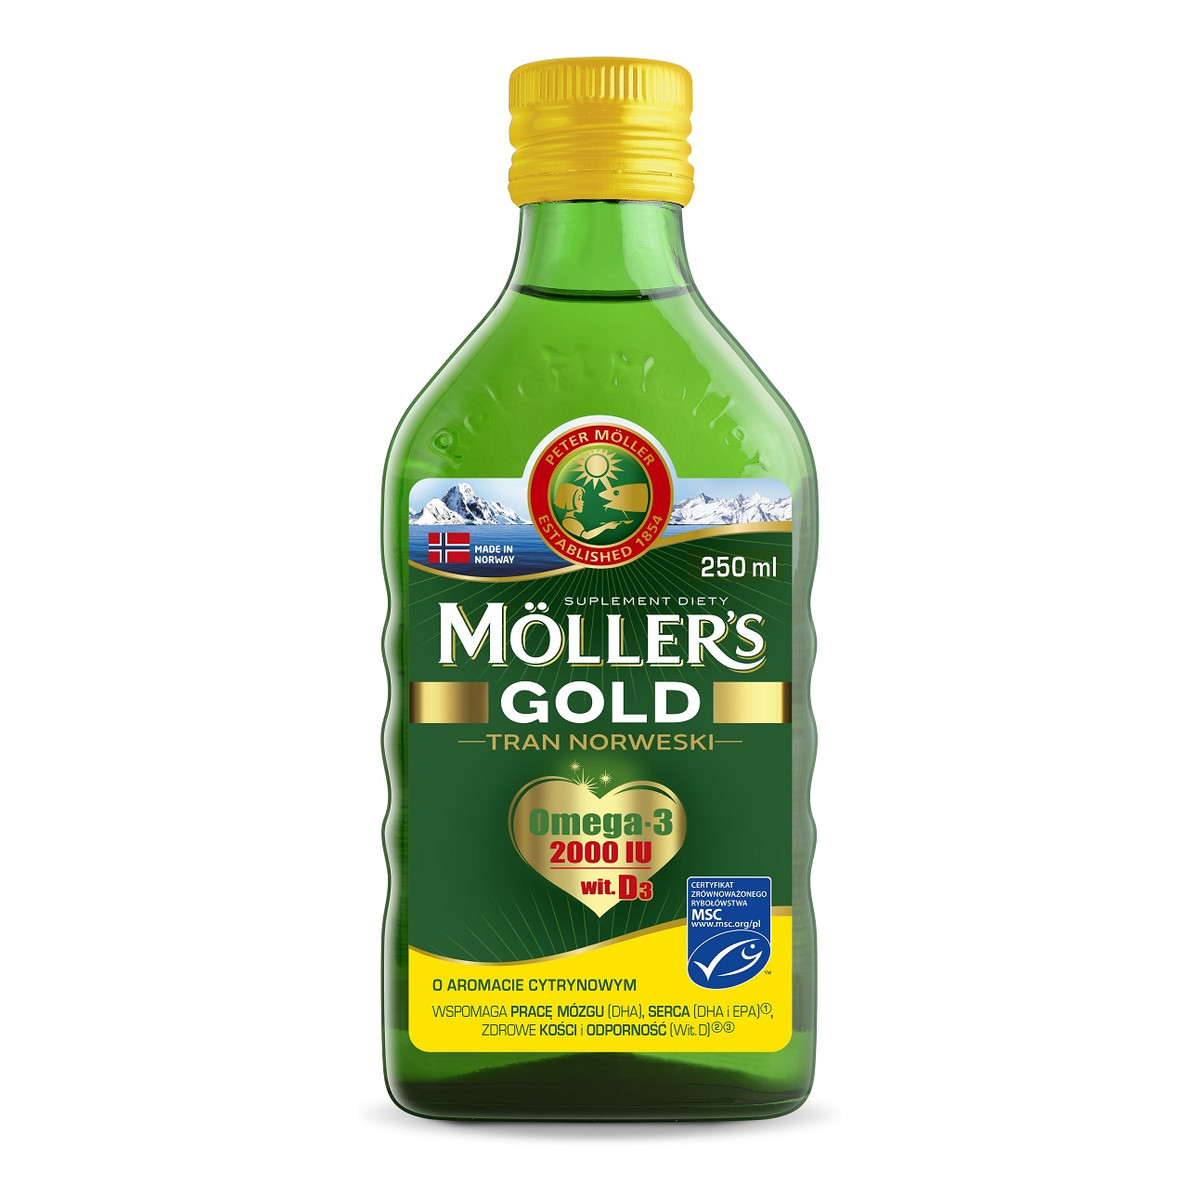 Moller's Gold tran norweski suplement diety cytrynowy 250ml